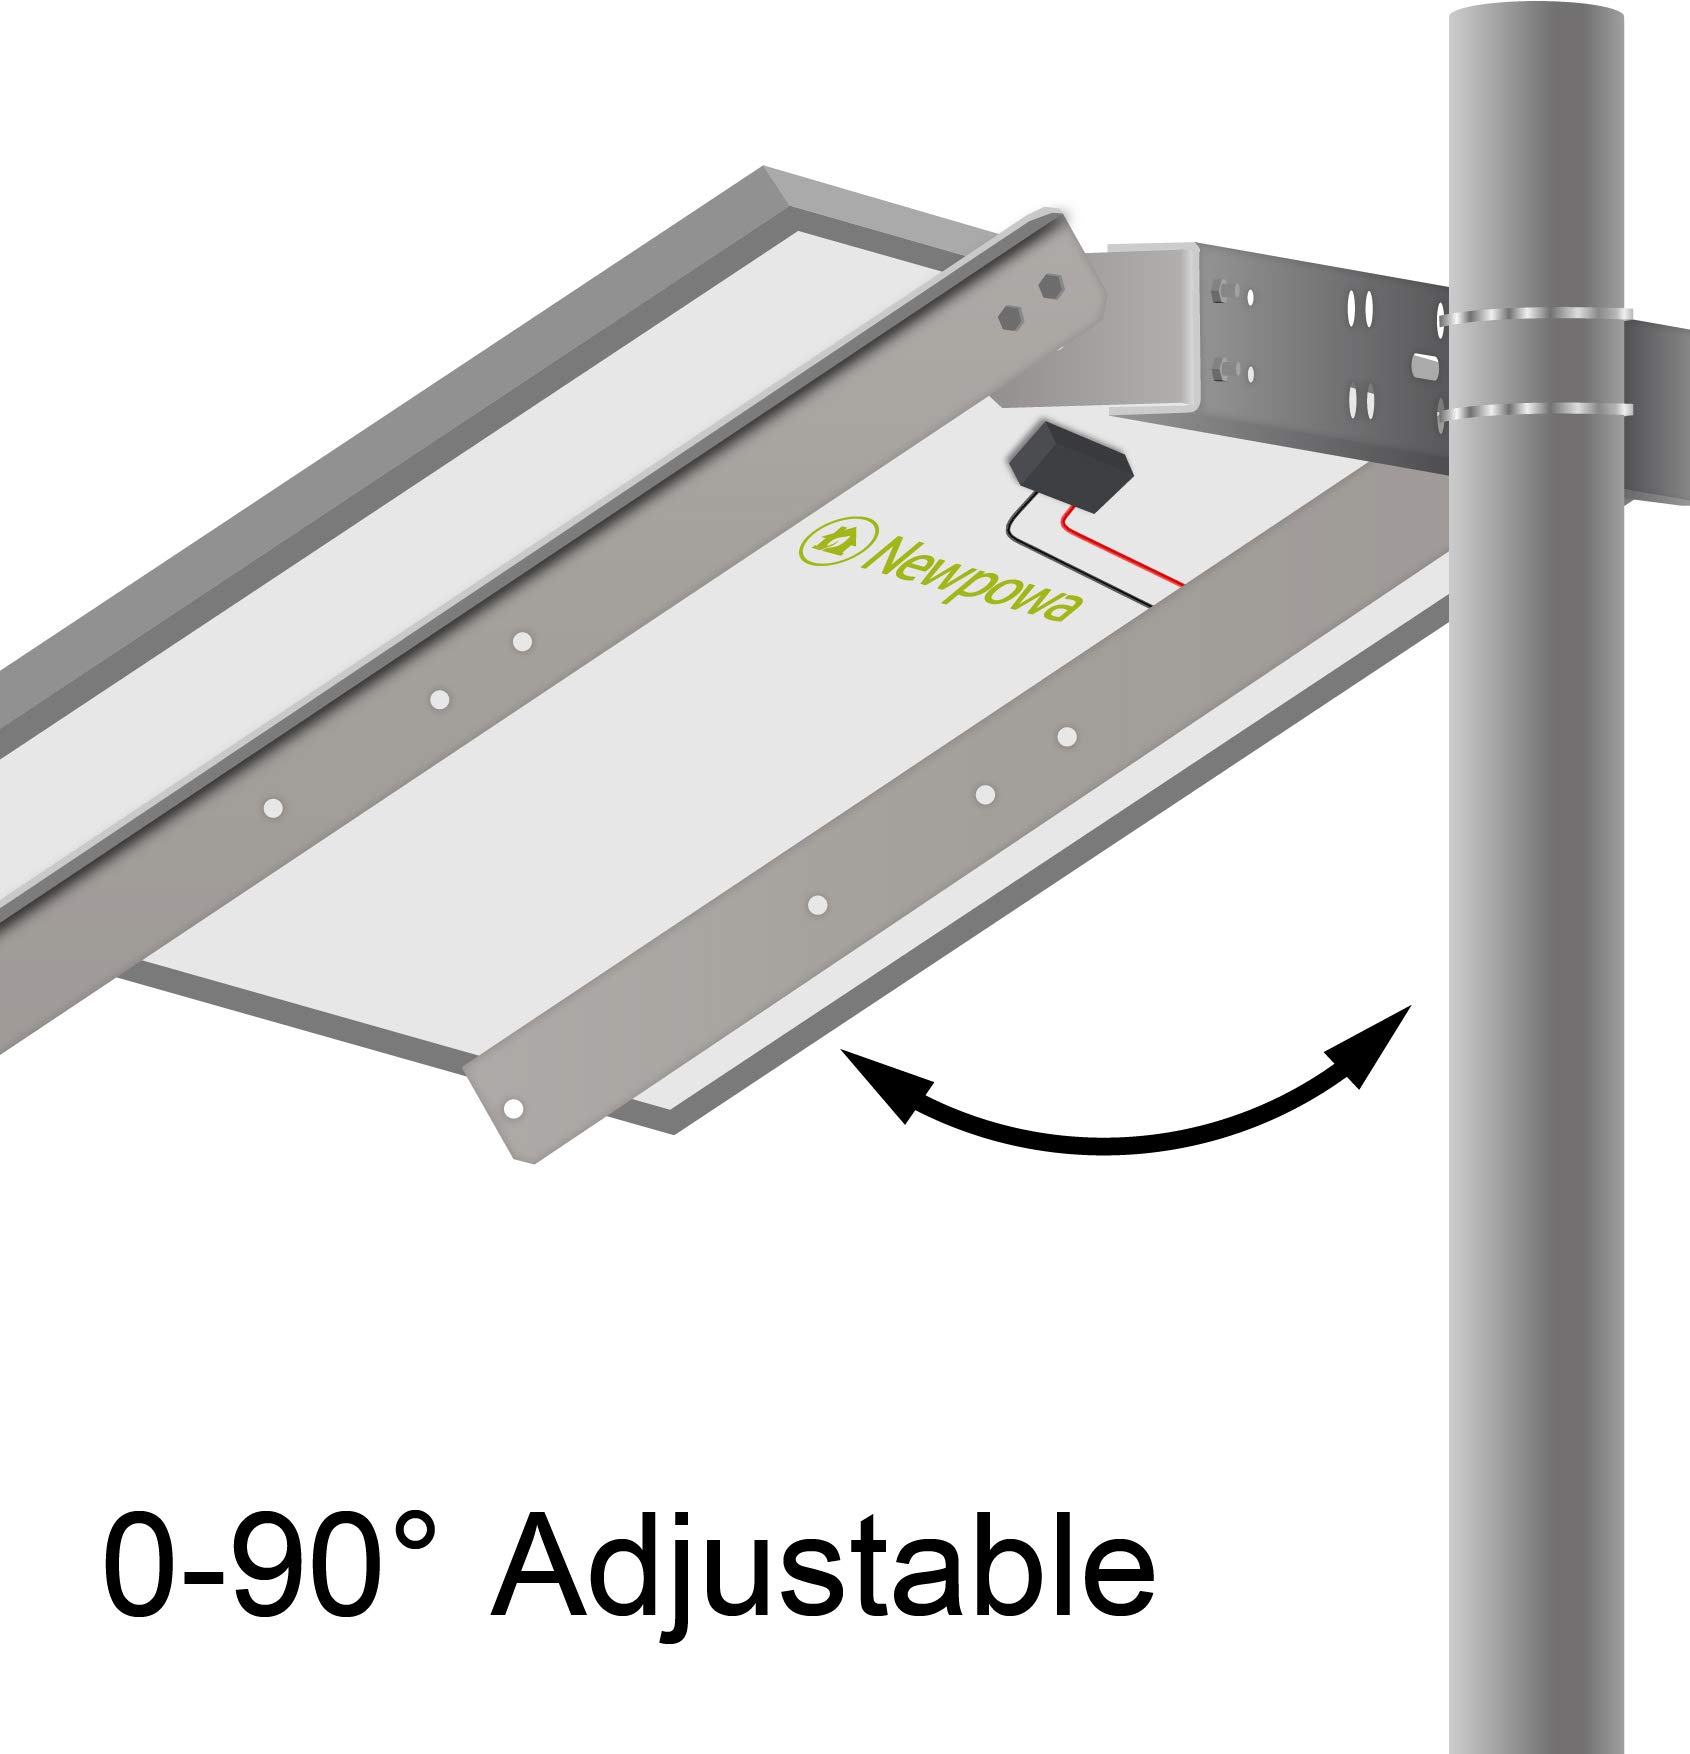 Newpowa Universal Solar Panel Heavy Duty Double Arm Pole Wall Mount for 70-120W Single Module at an tilt Angle from 0-90°…